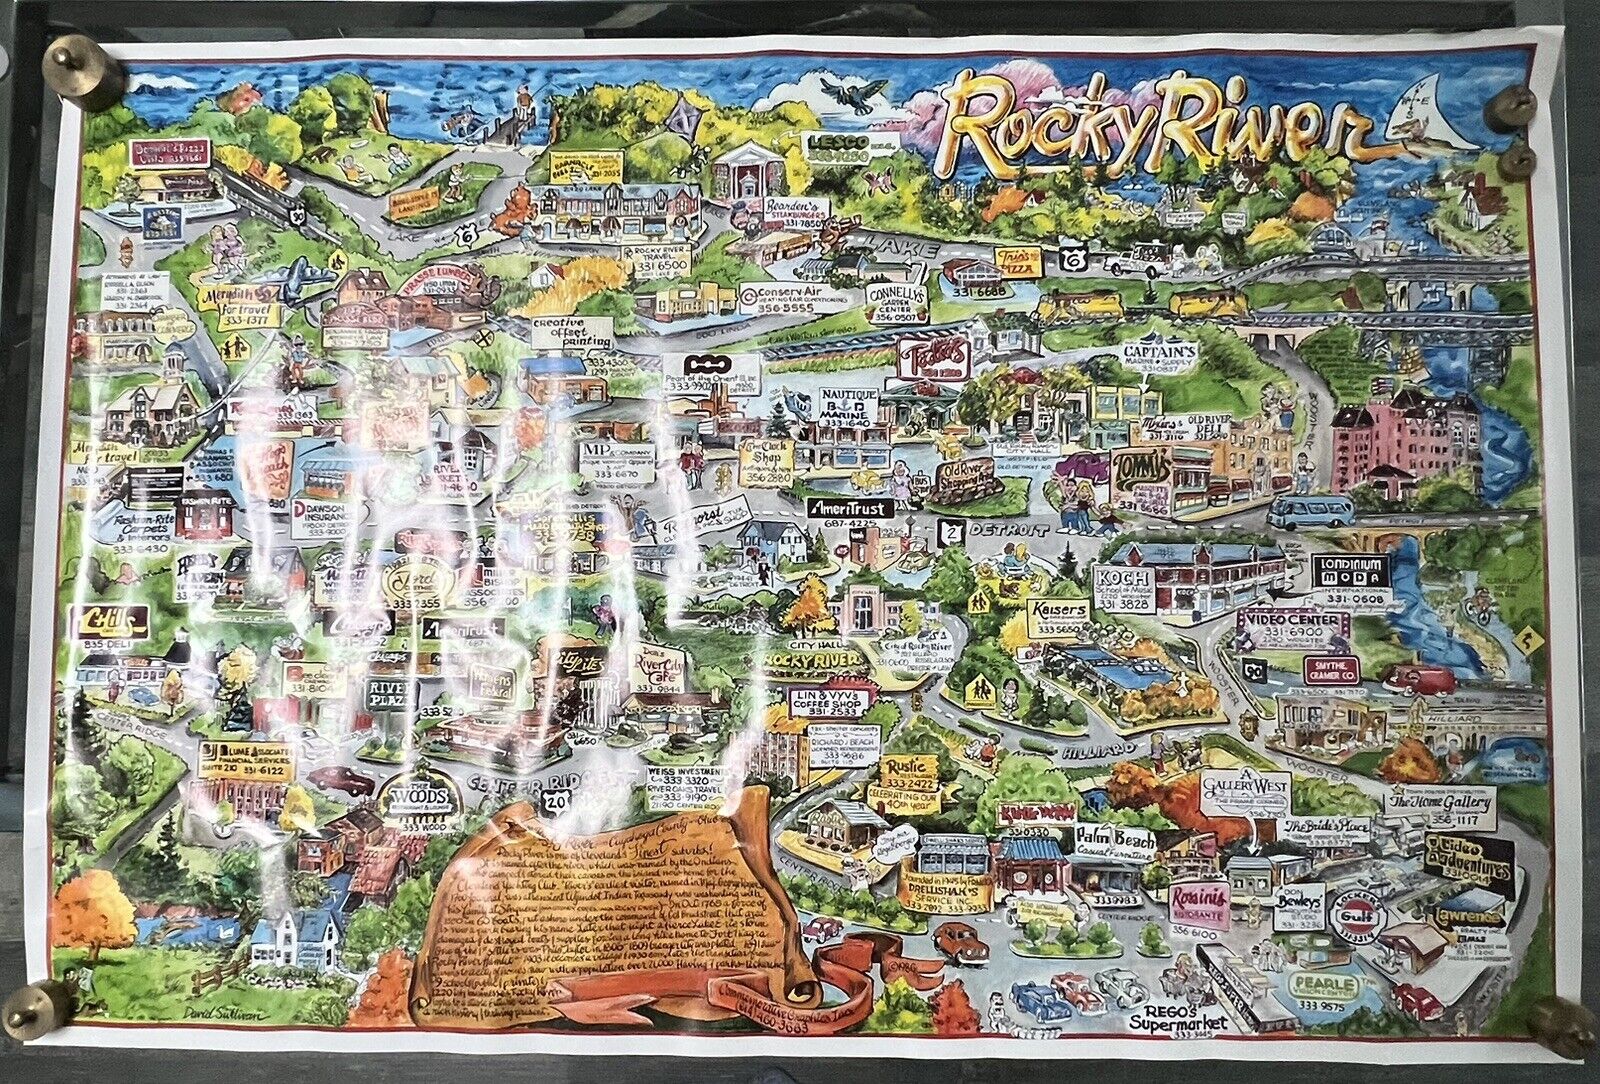 ROCKY RIVER, OHIO - 36” x 24”, Vintage Map of Rocky River David Sullivan